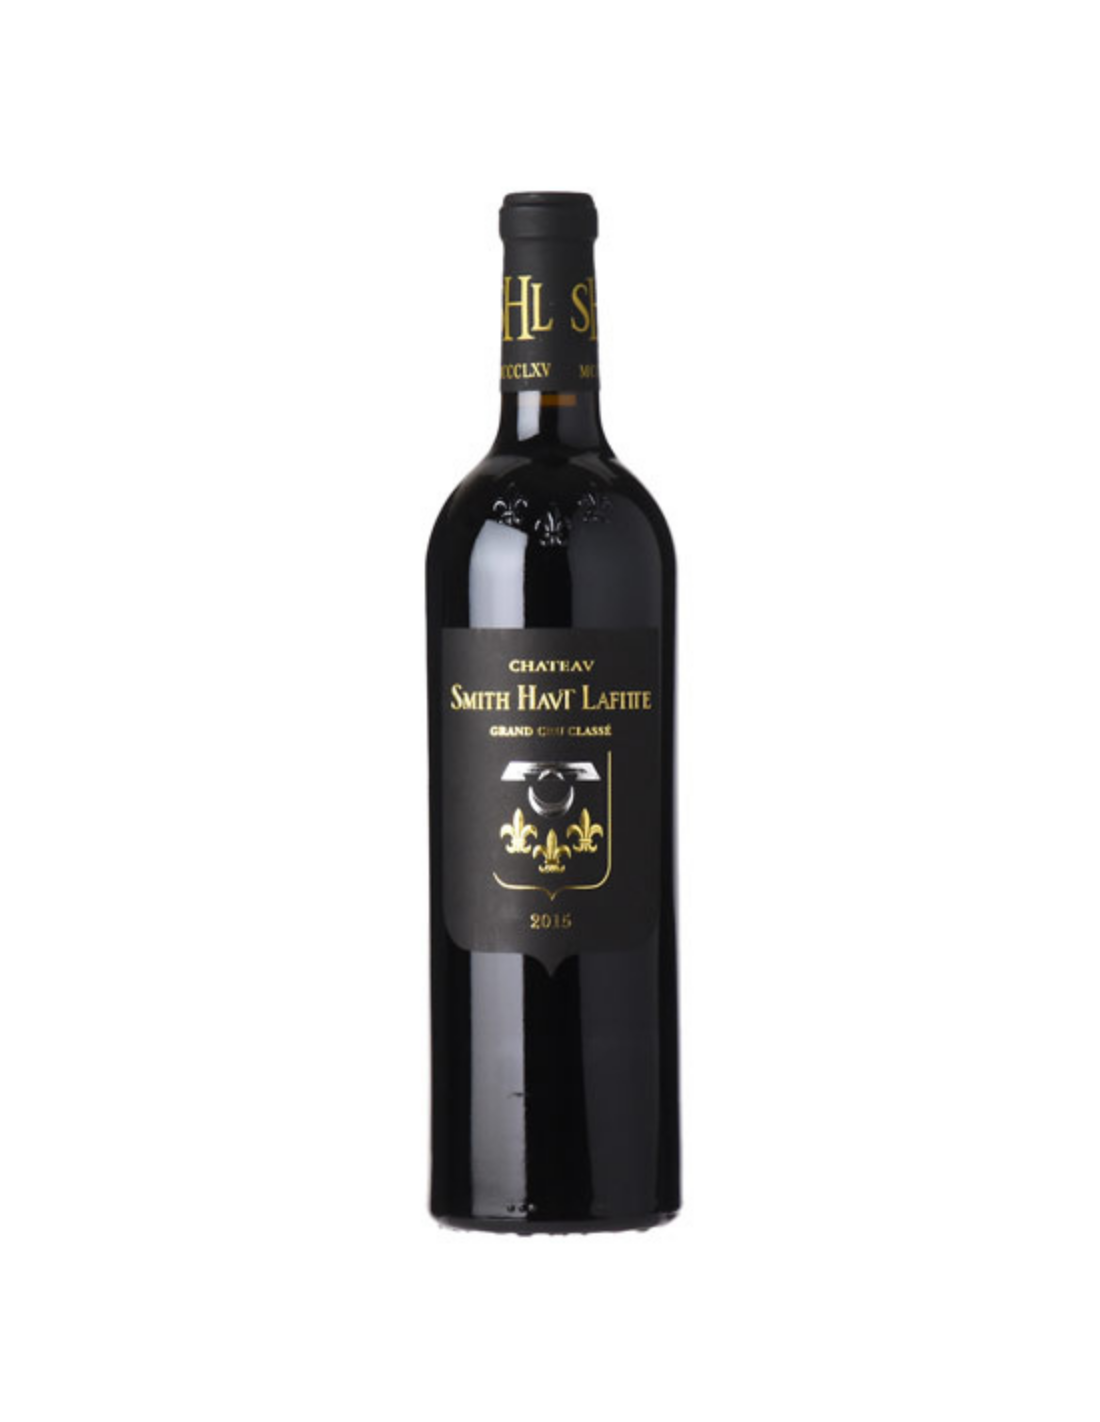 Vin rosu, Cupaj, Château Smith Haut-Lafitte Pessac-Léognan, 0.75L, 13% alc., Franta alcooldiscount.ro